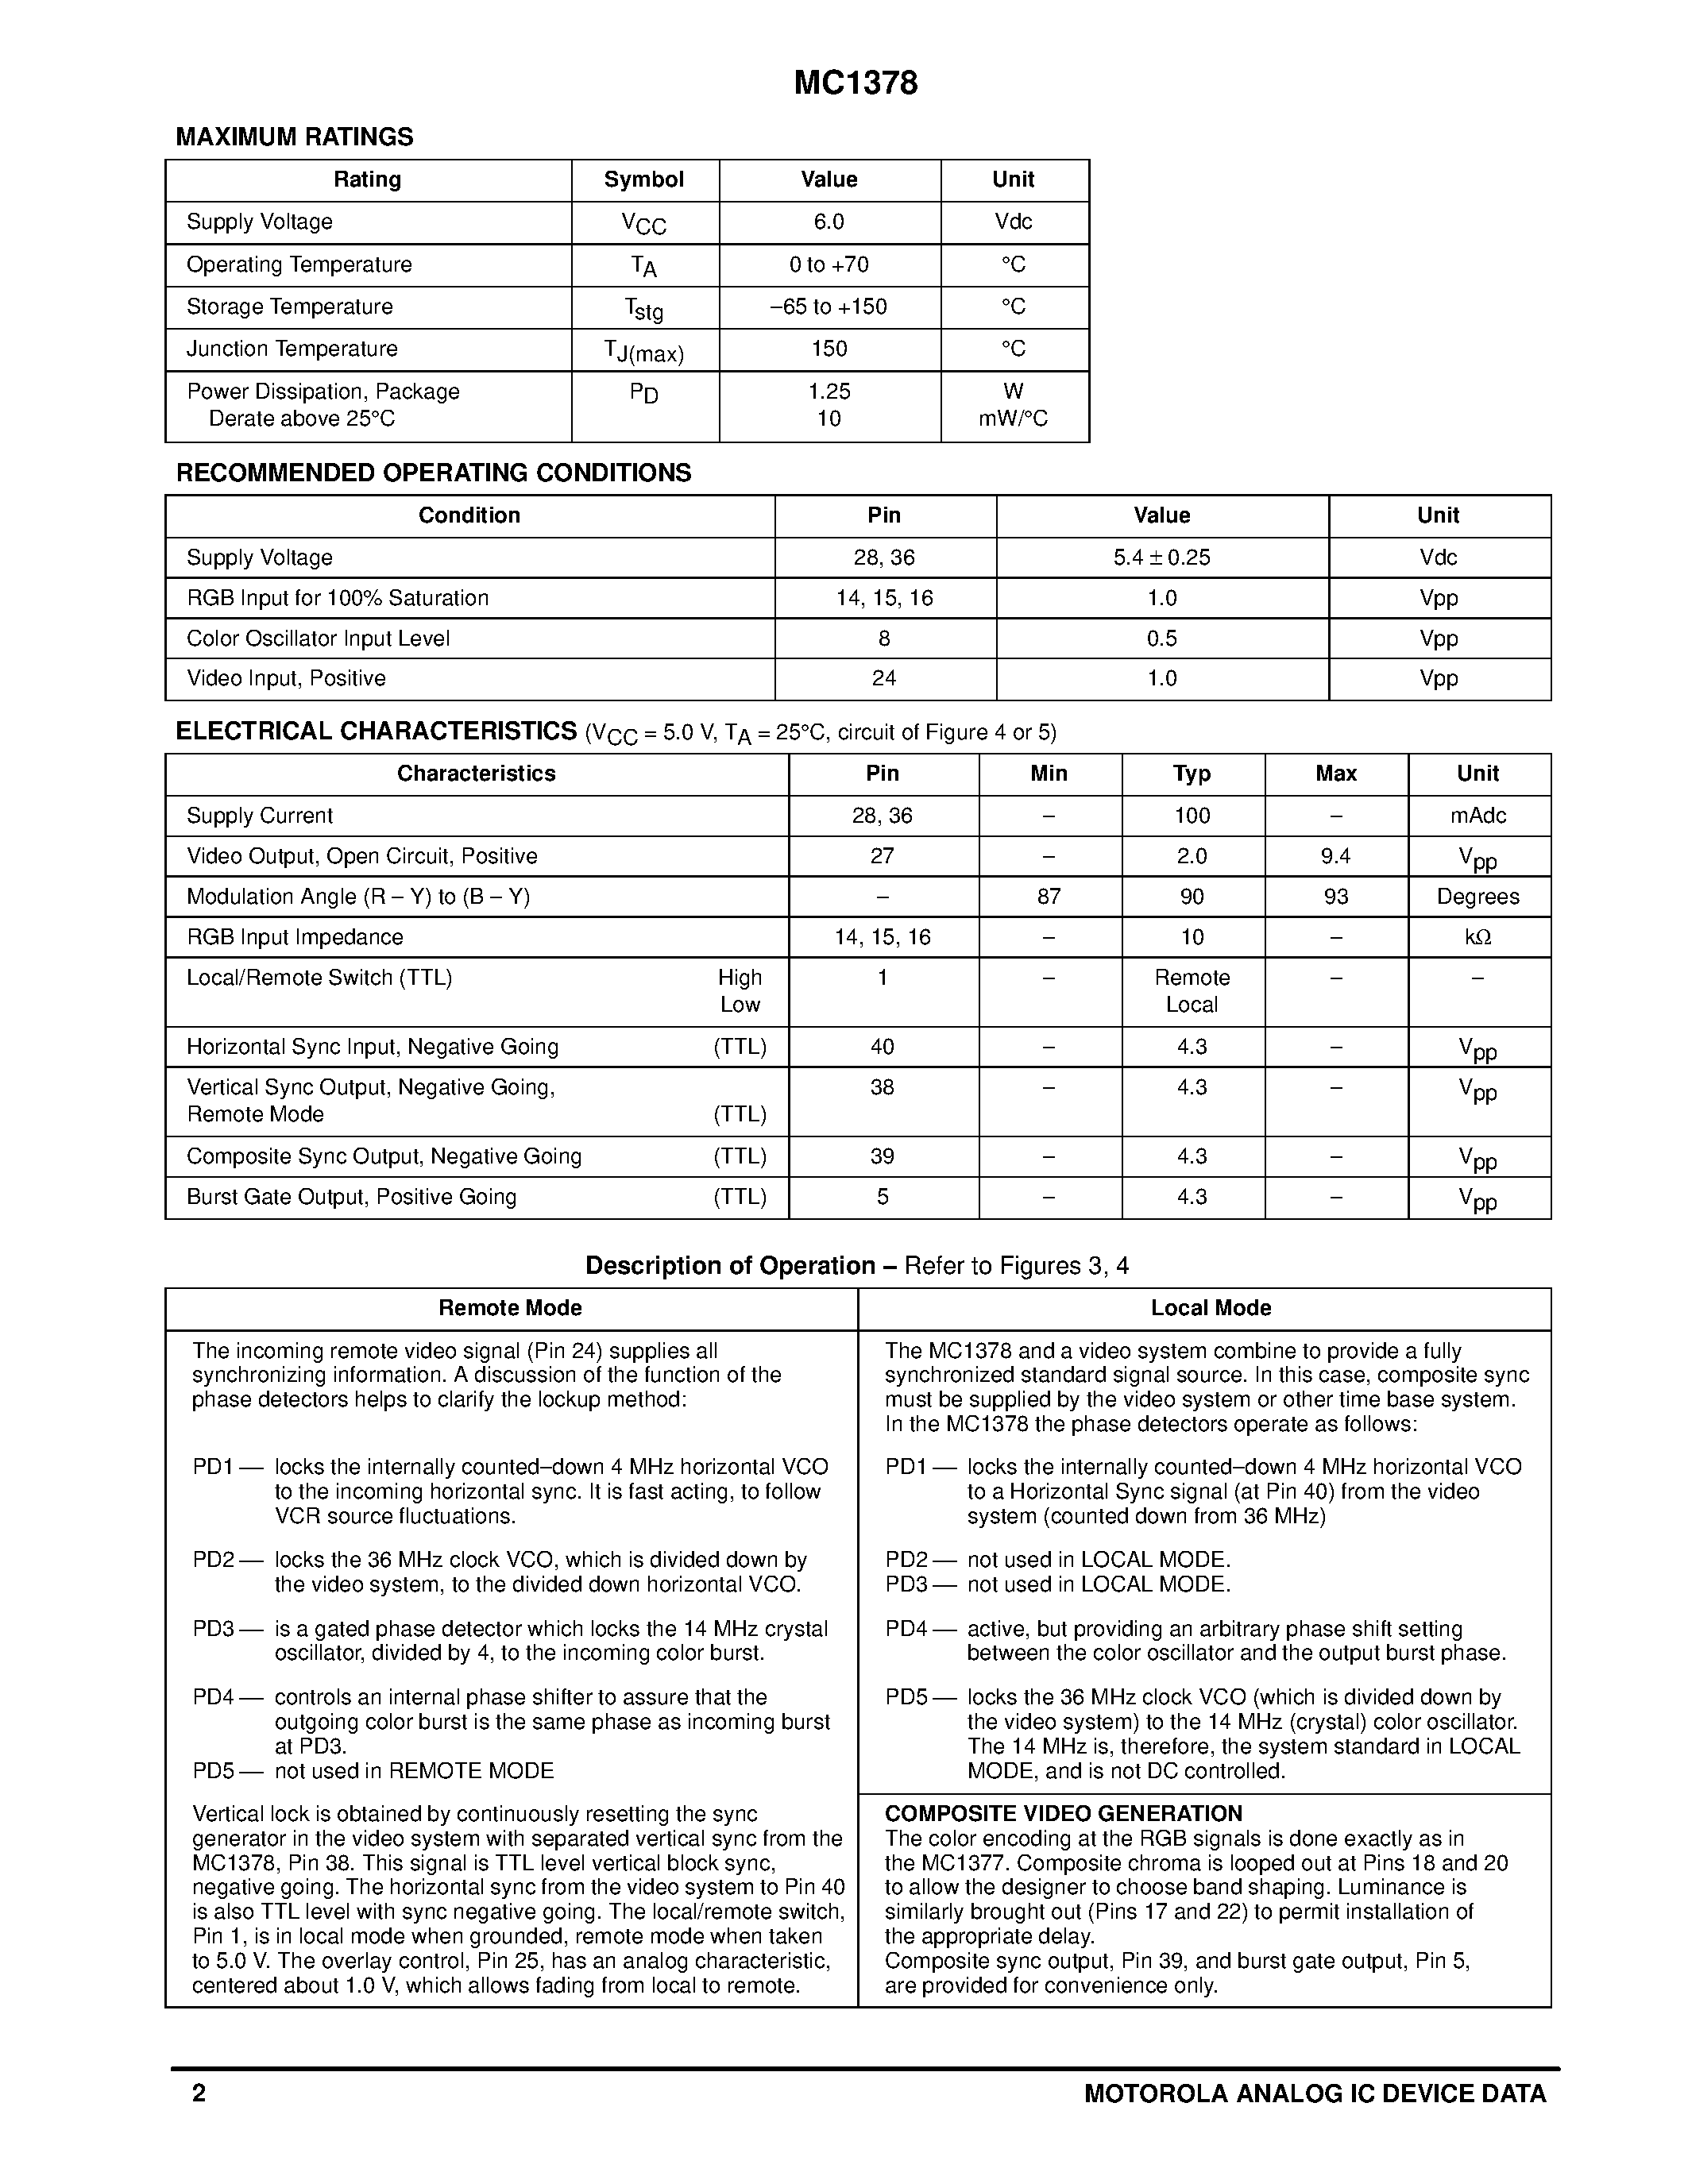 Datasheet MC1378P - ACF-II Evaluation Board Operating Manual page 2